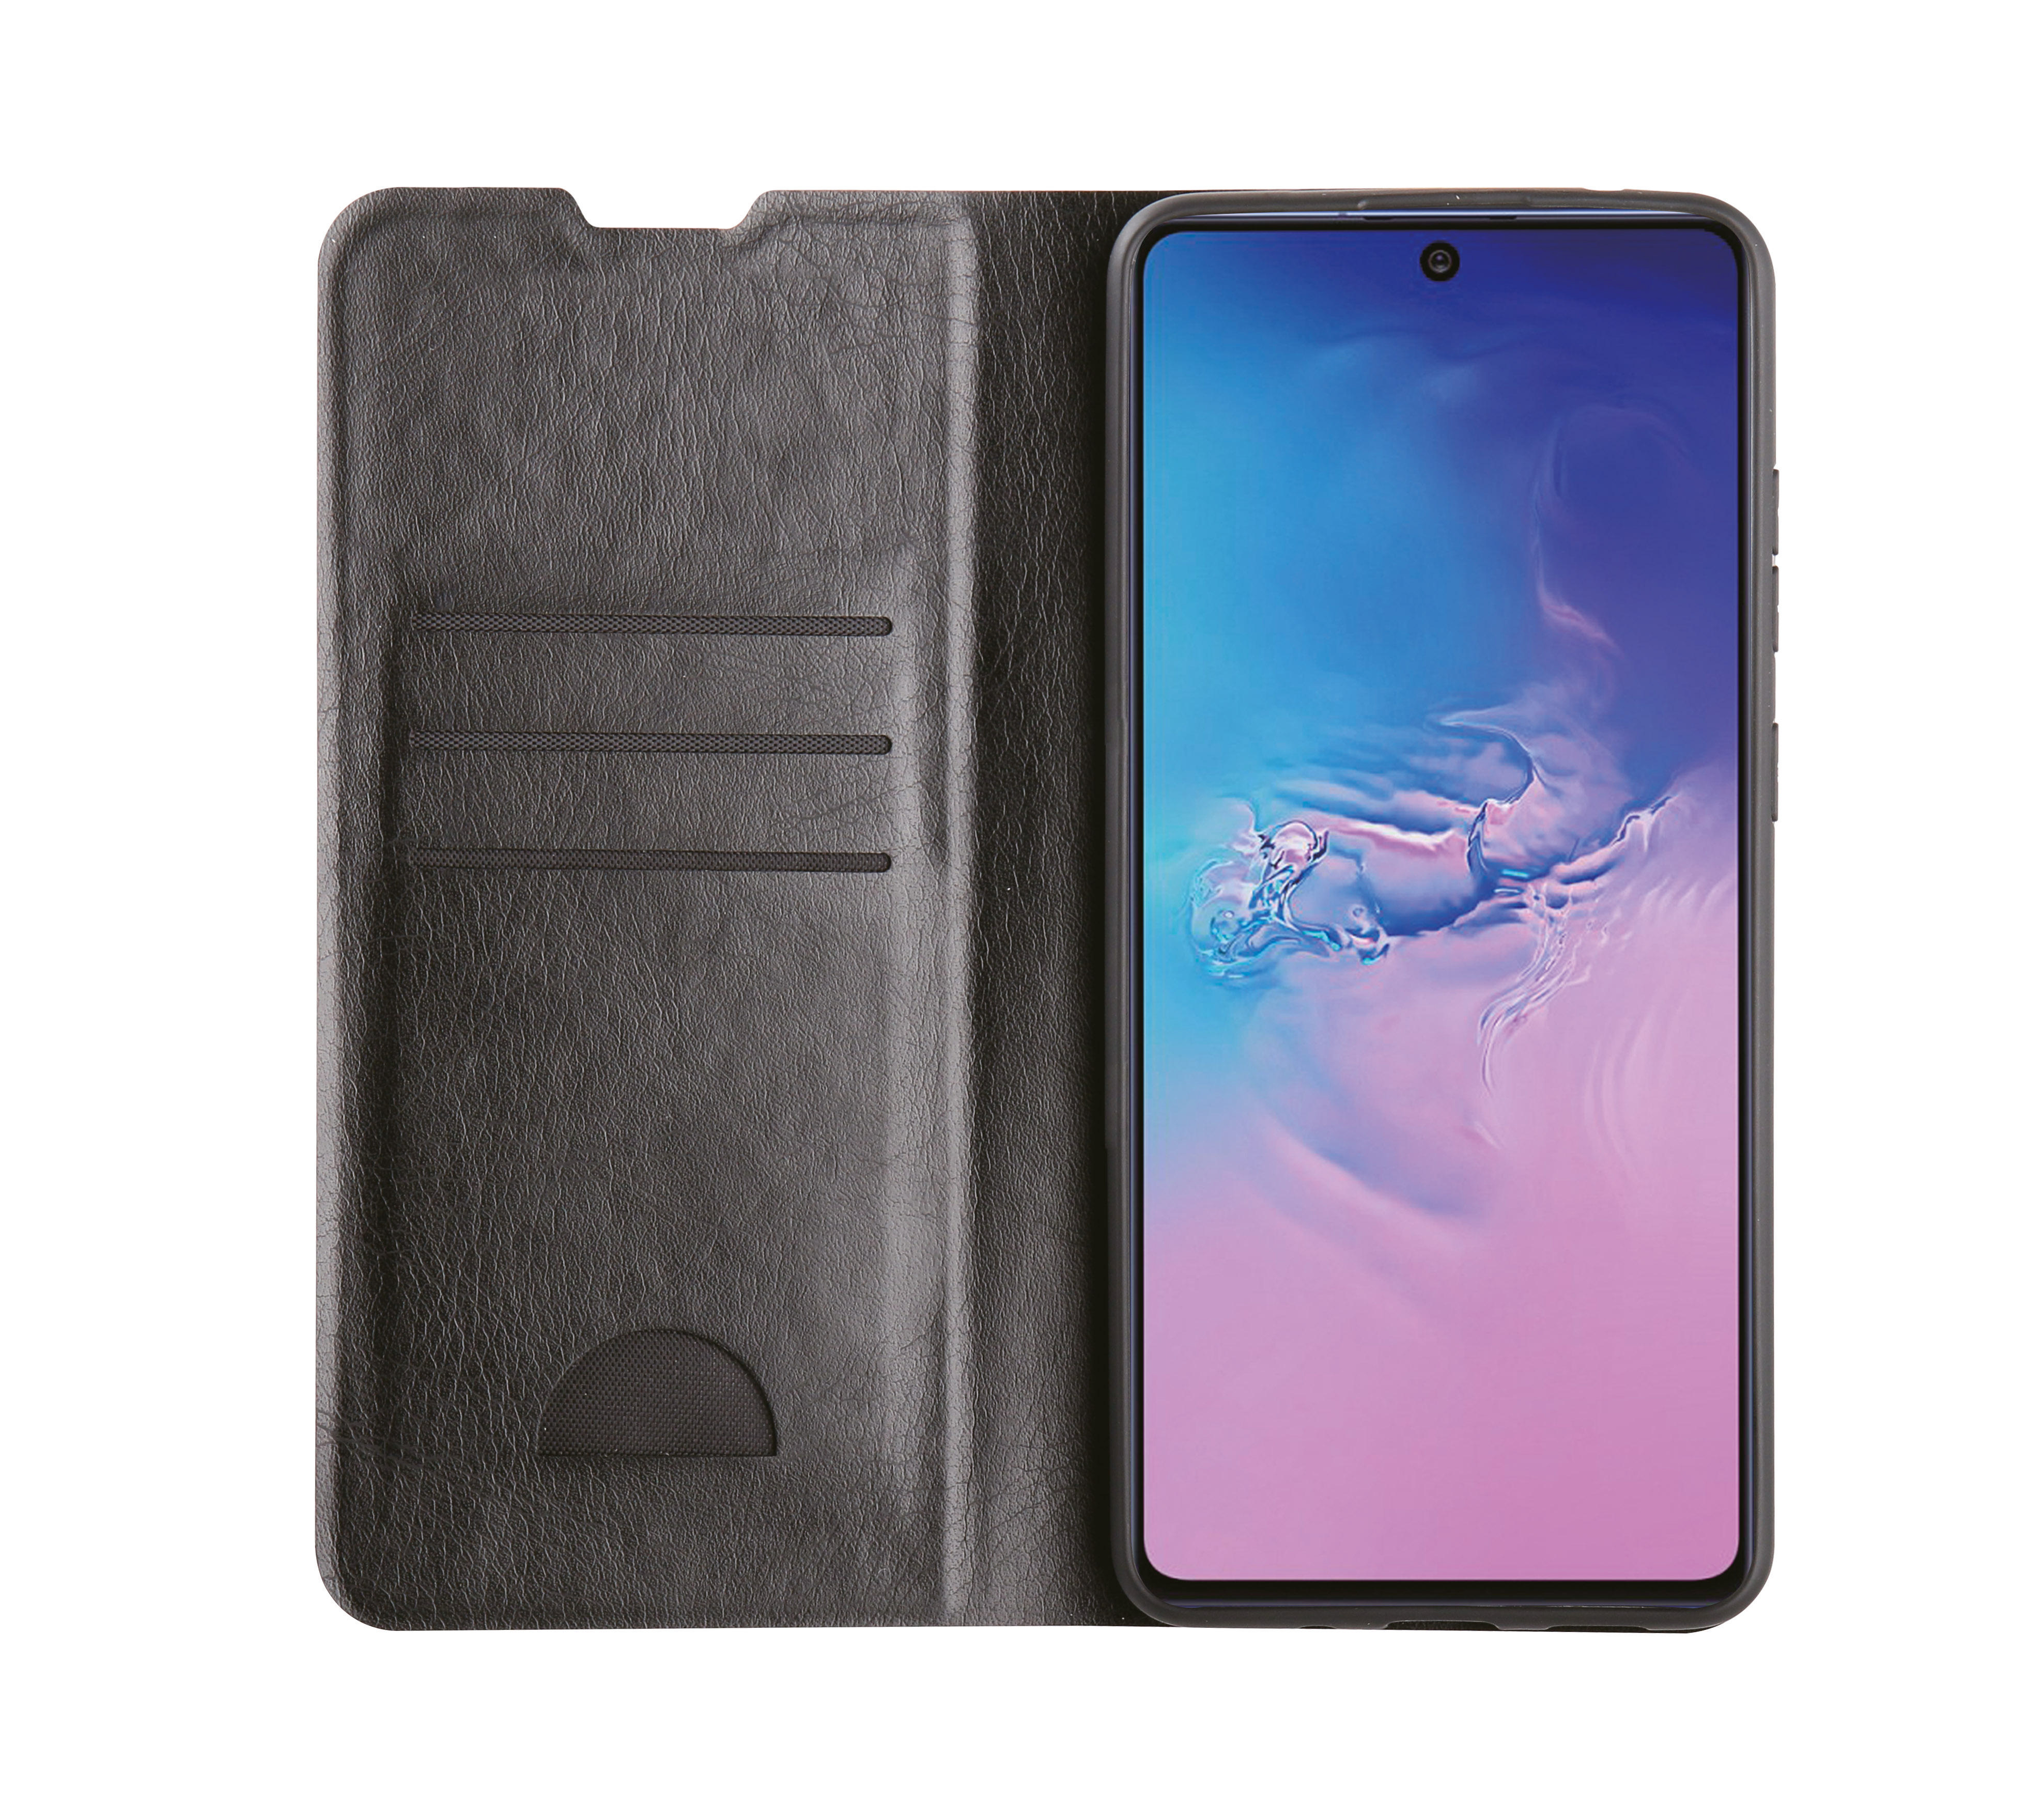 VIVANCO Premium Wallet, Samsung, Schwarz S10 Galaxy Bookcover, Lite